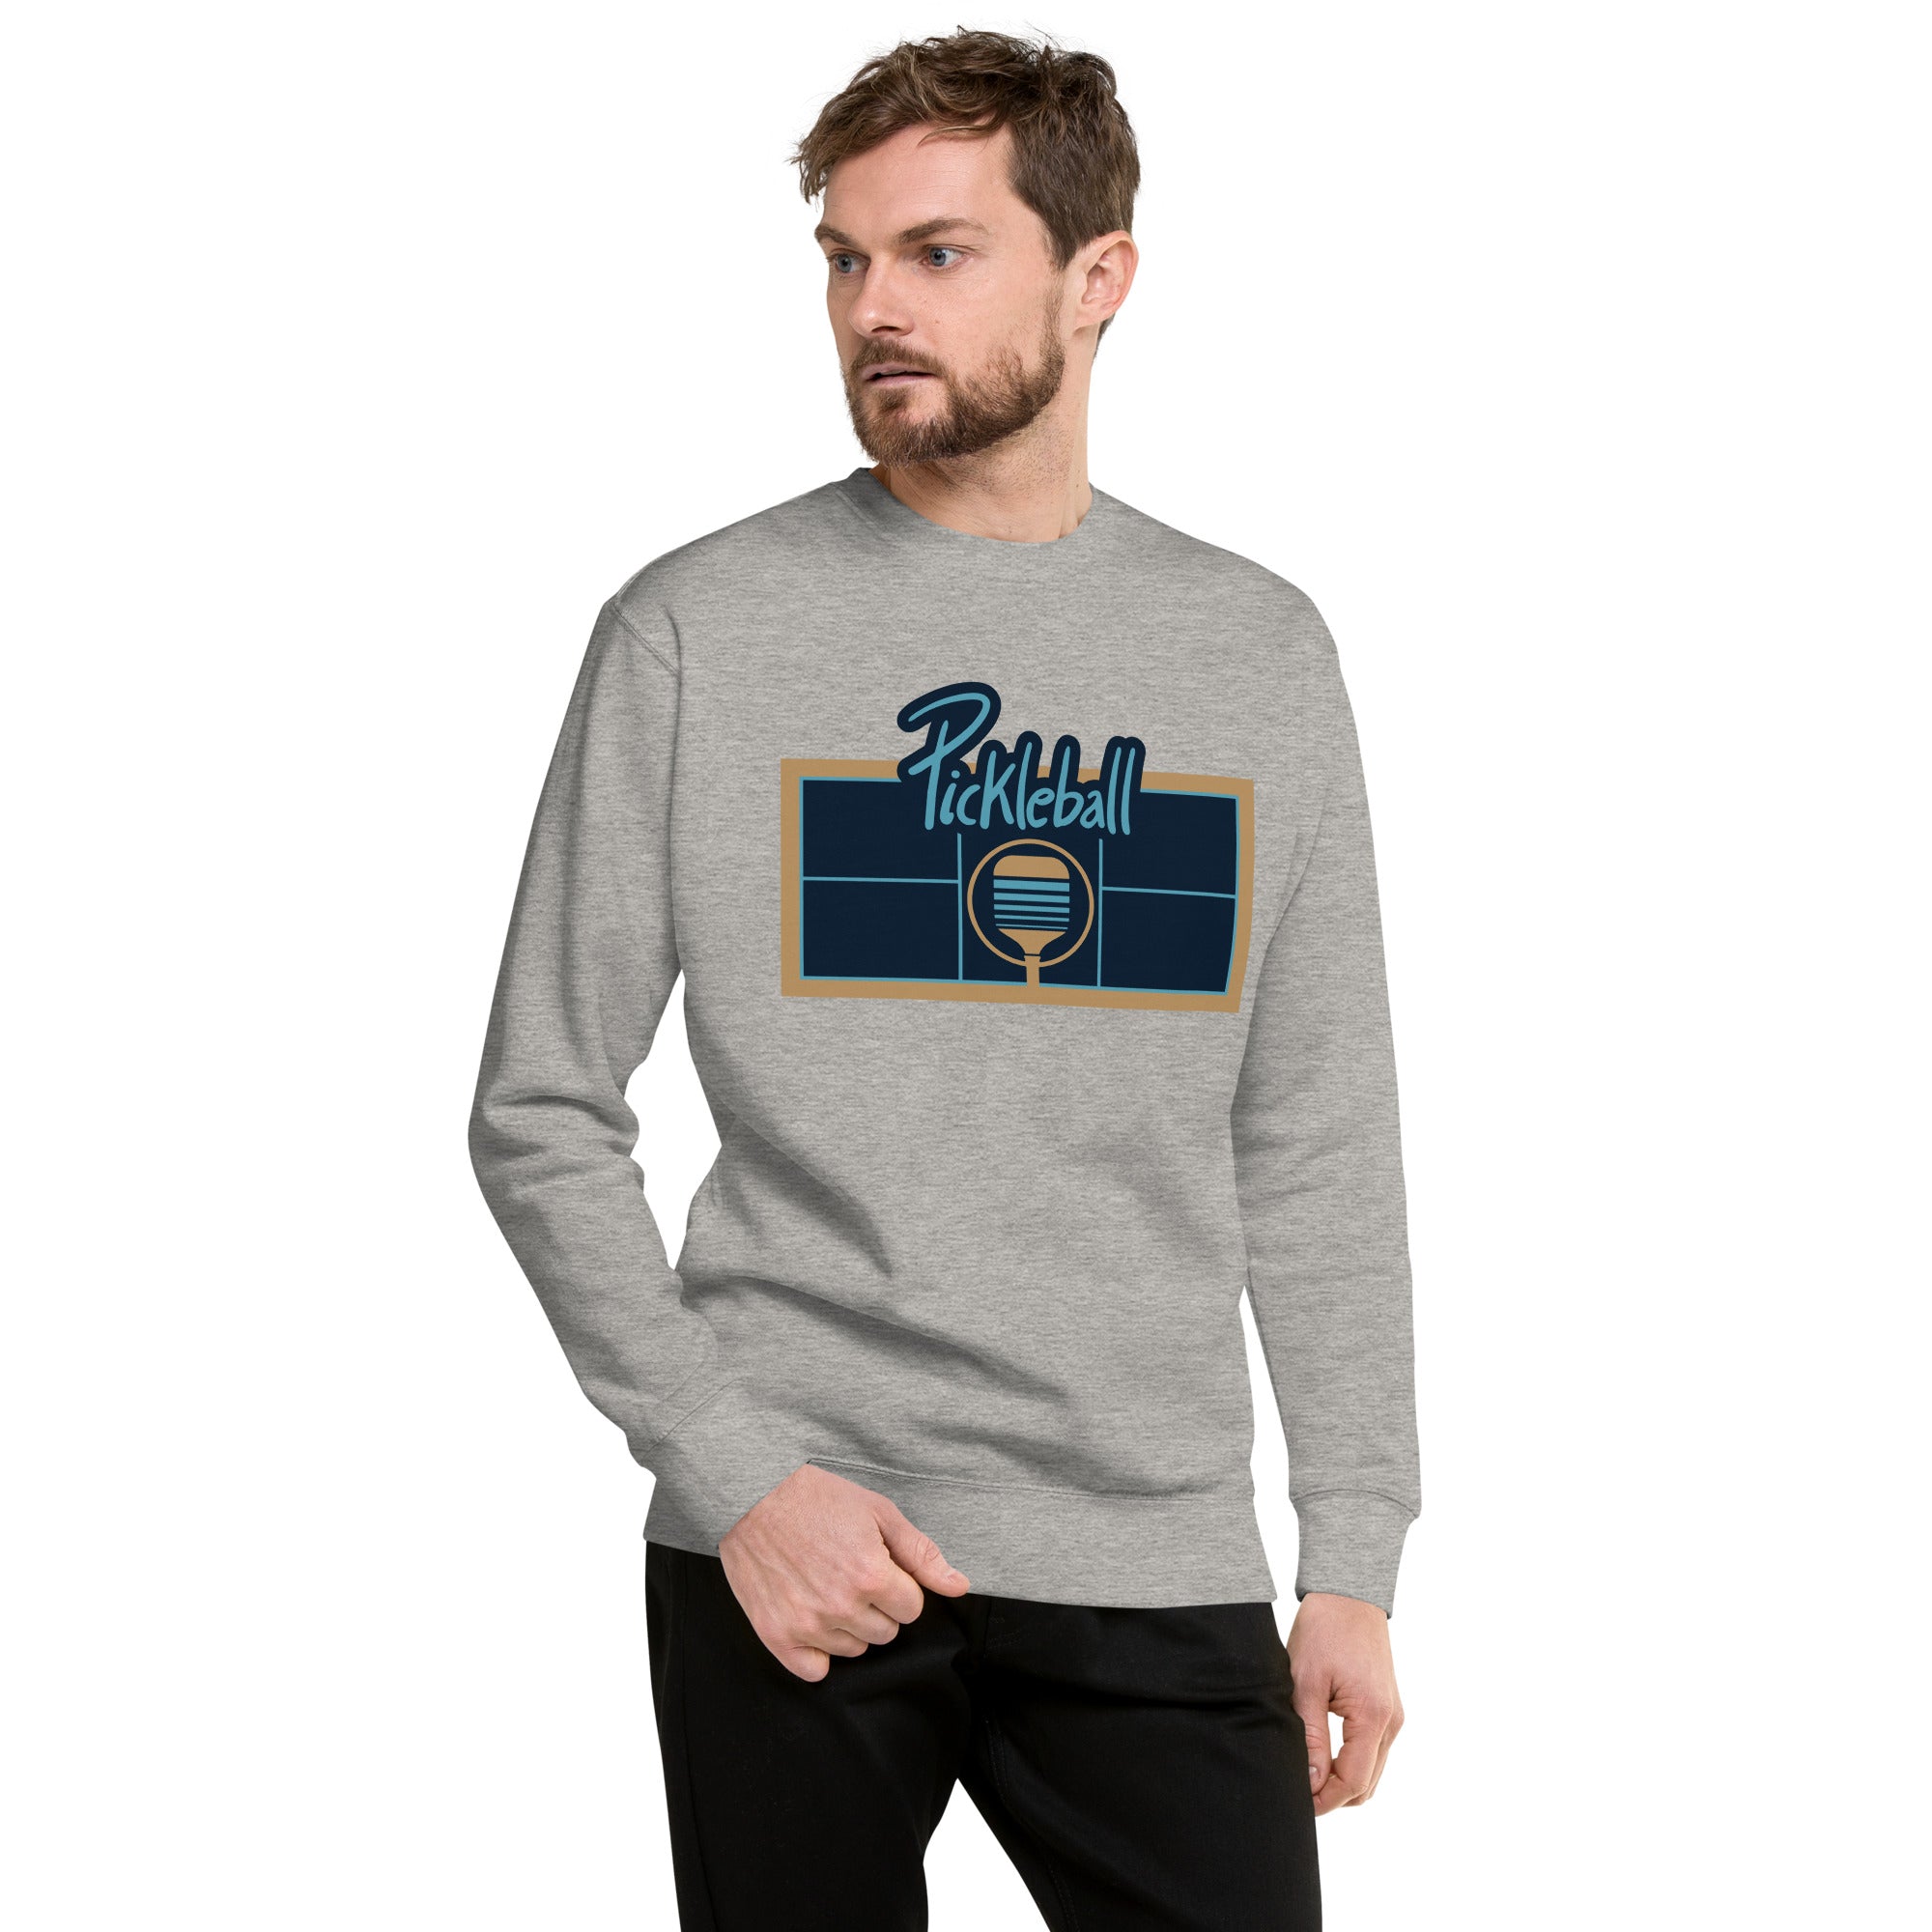 Pickleball Original Heavy Crew Sweatshirt